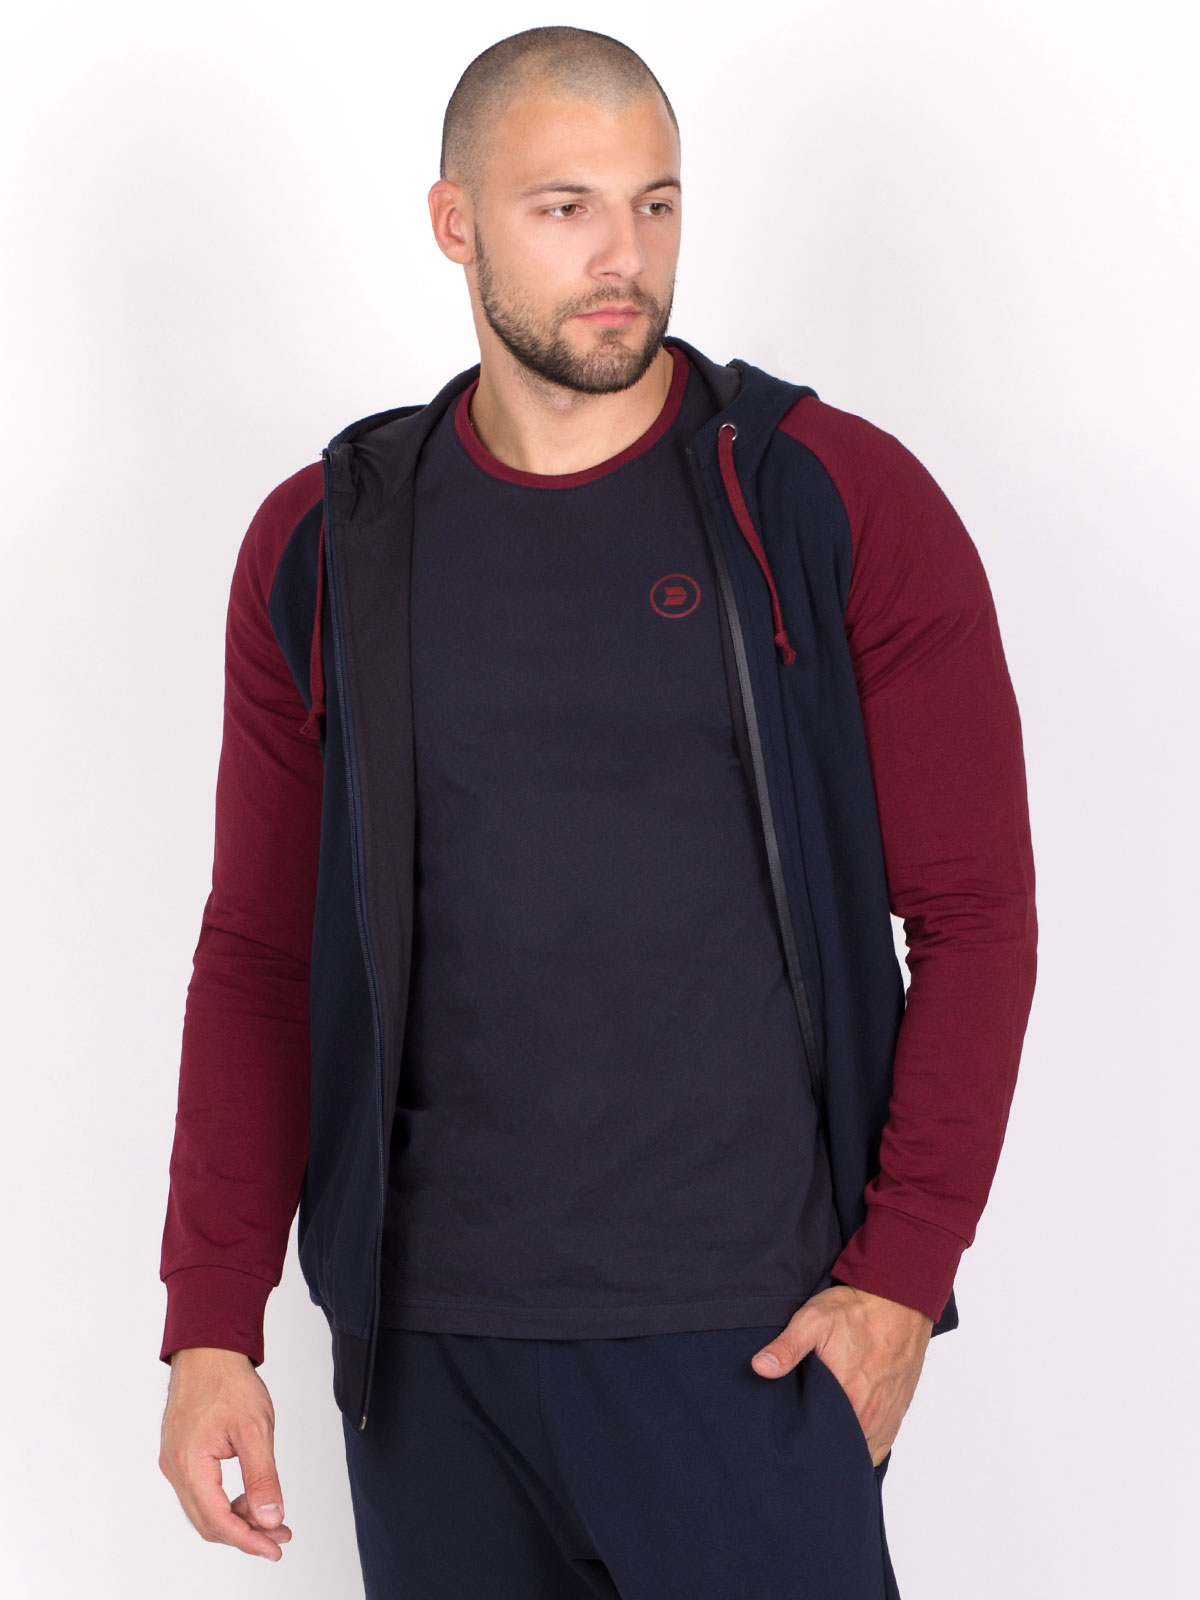 Sweatshirt in burgundy and navy blue - 28107 € 50.06 img2